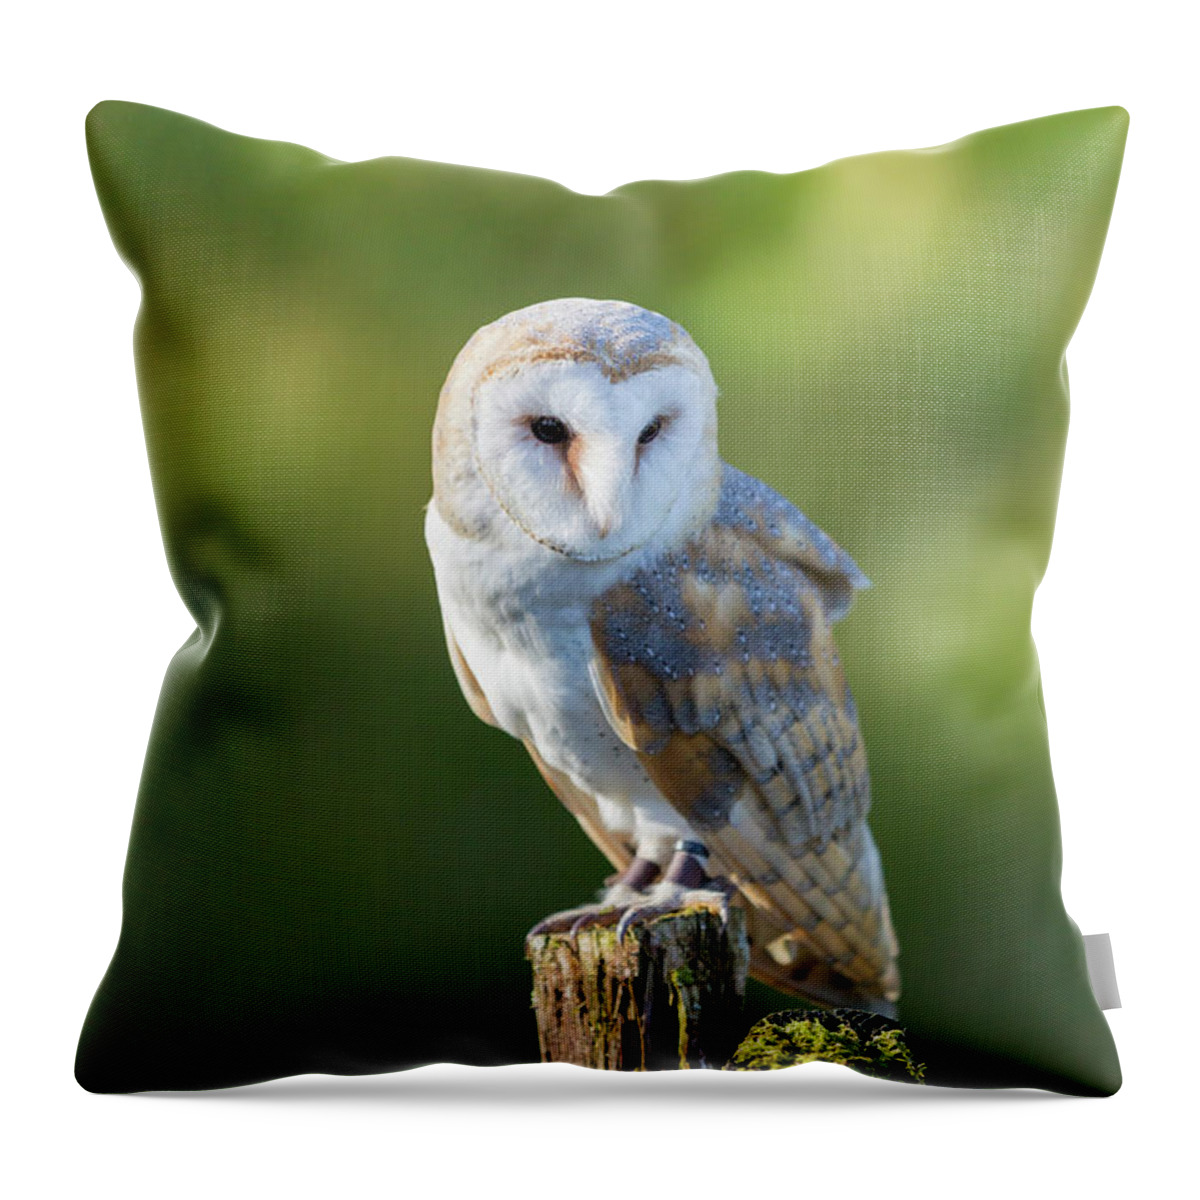 Barn Owl Throw Pillow featuring the photograph Barn Owl by Anita Nicholson